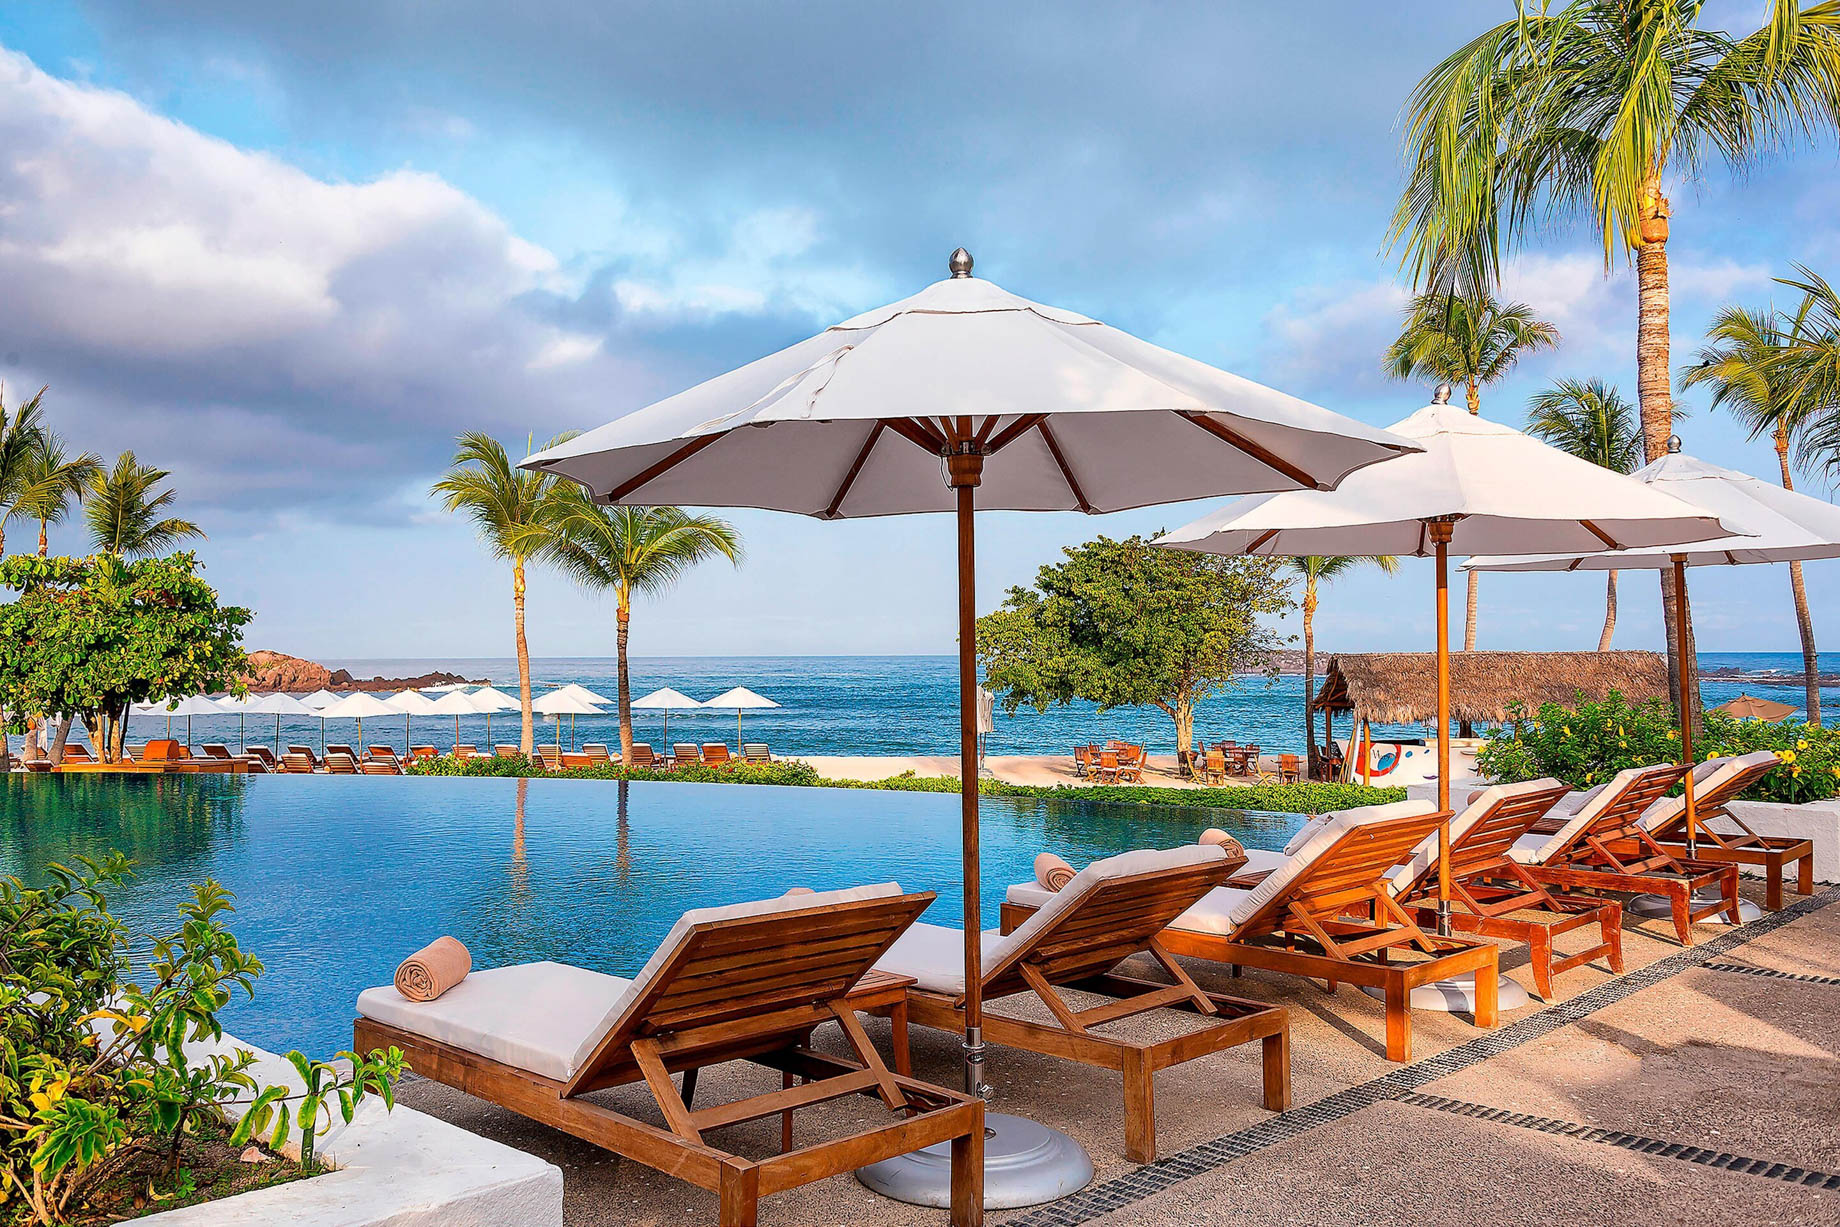 The St. Regis Punta Mita Resort – Nayarit, Mexico – Sea Breeze Beach Club Pool